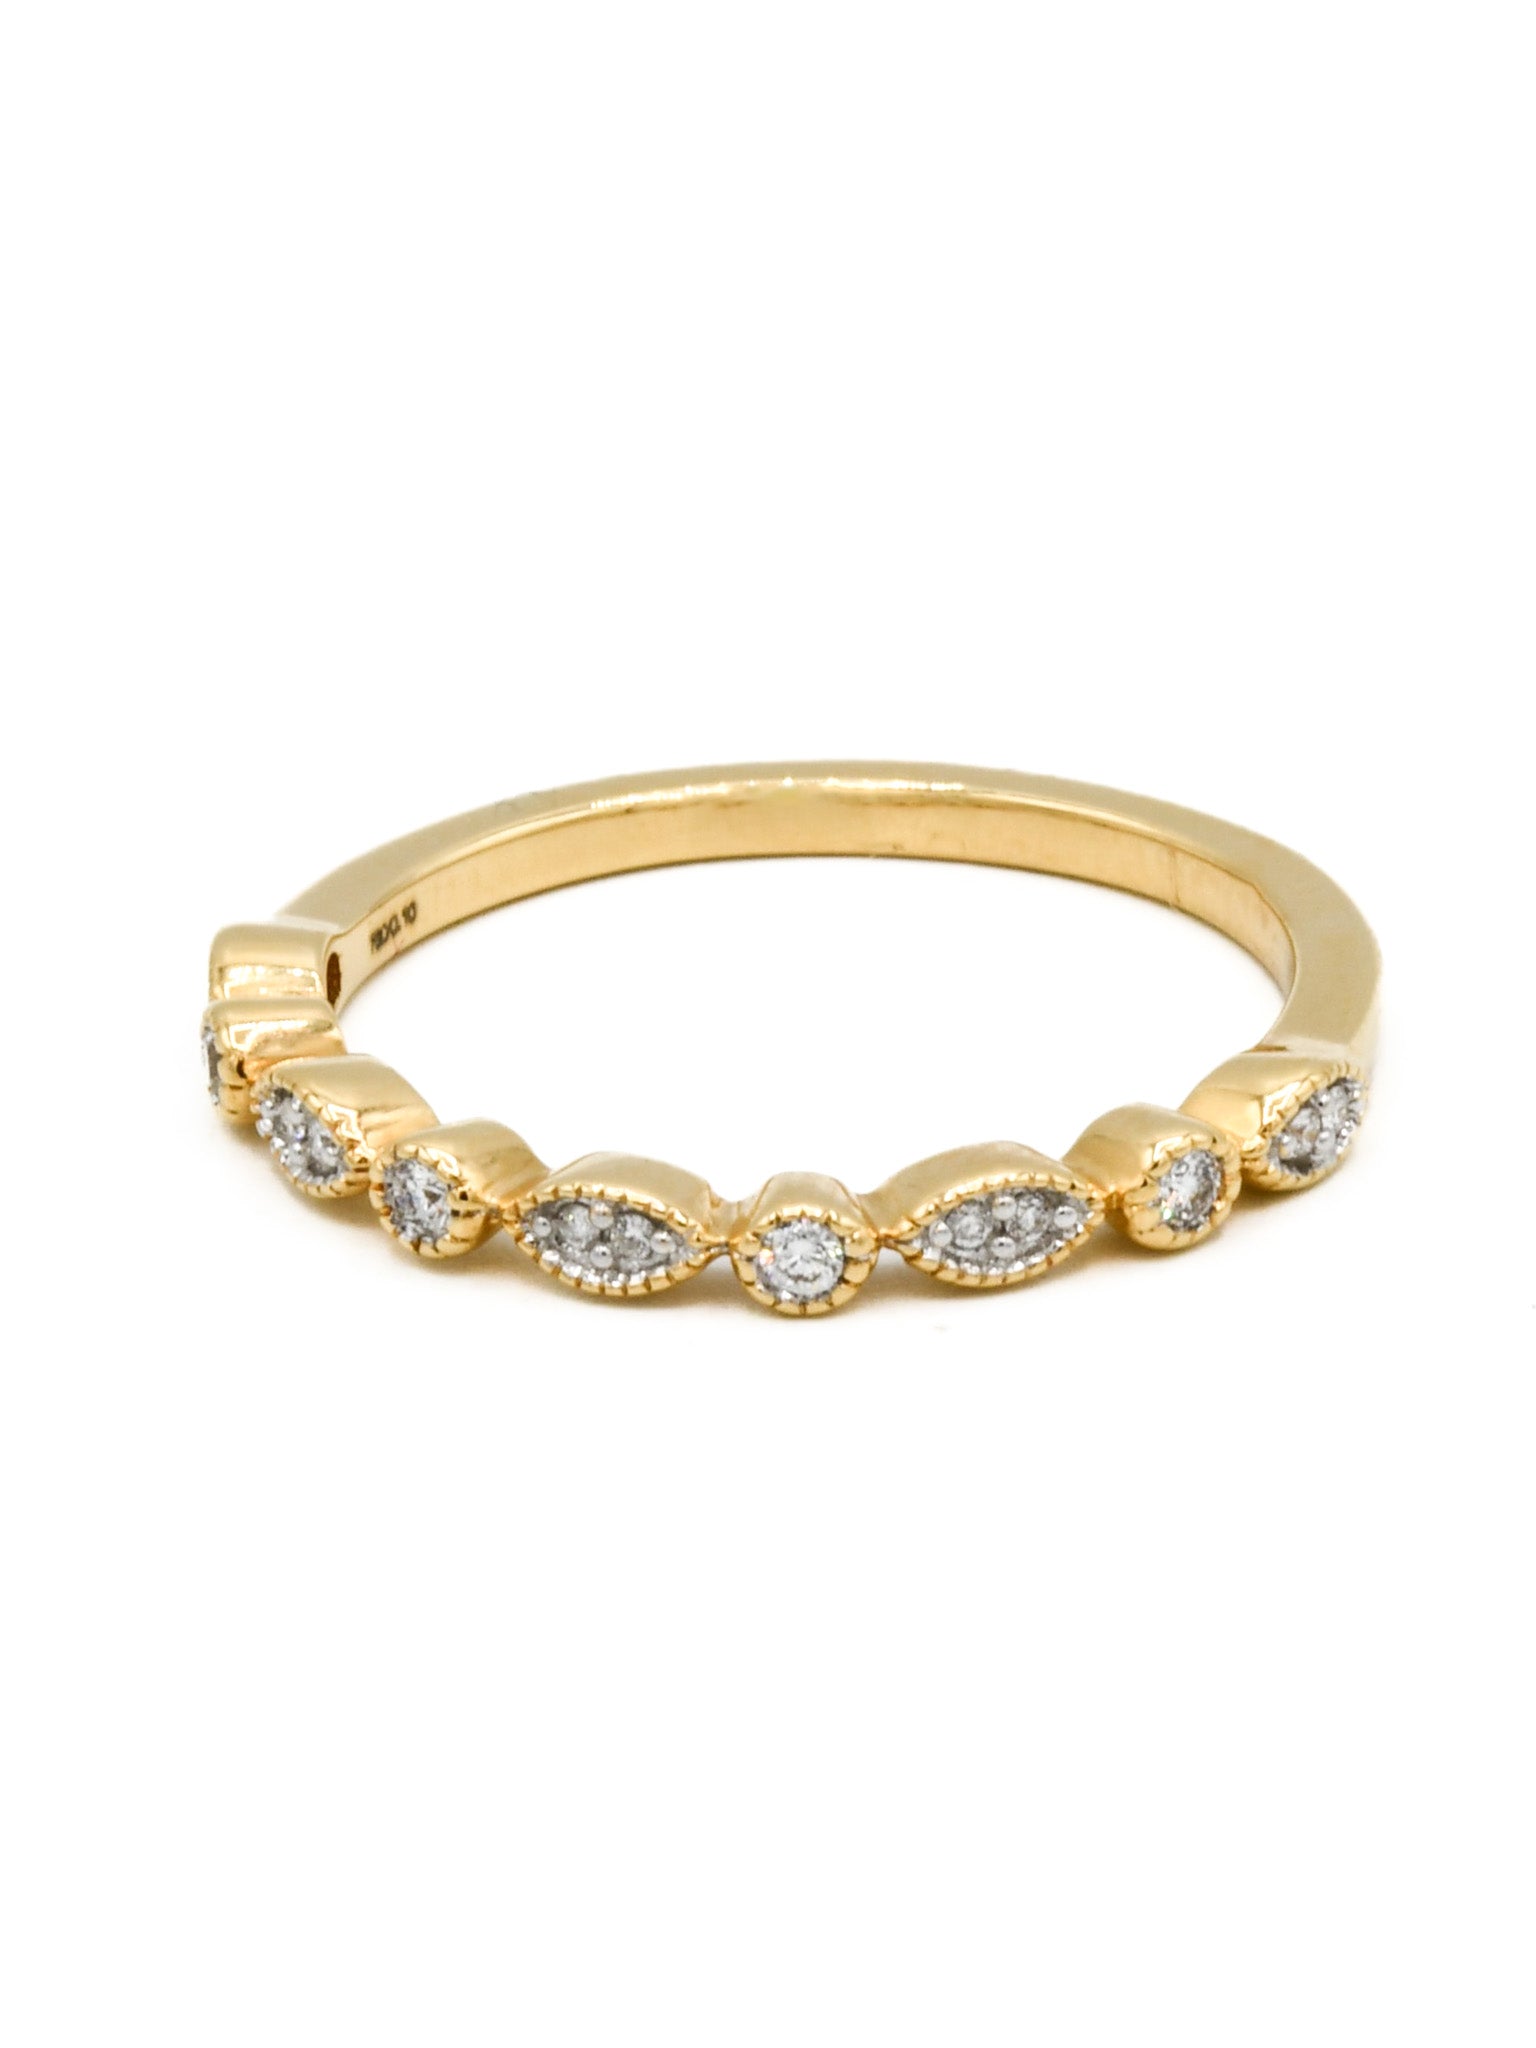 18ct Gold 0.10ct Diamond Ladies Ring - Roop Darshan